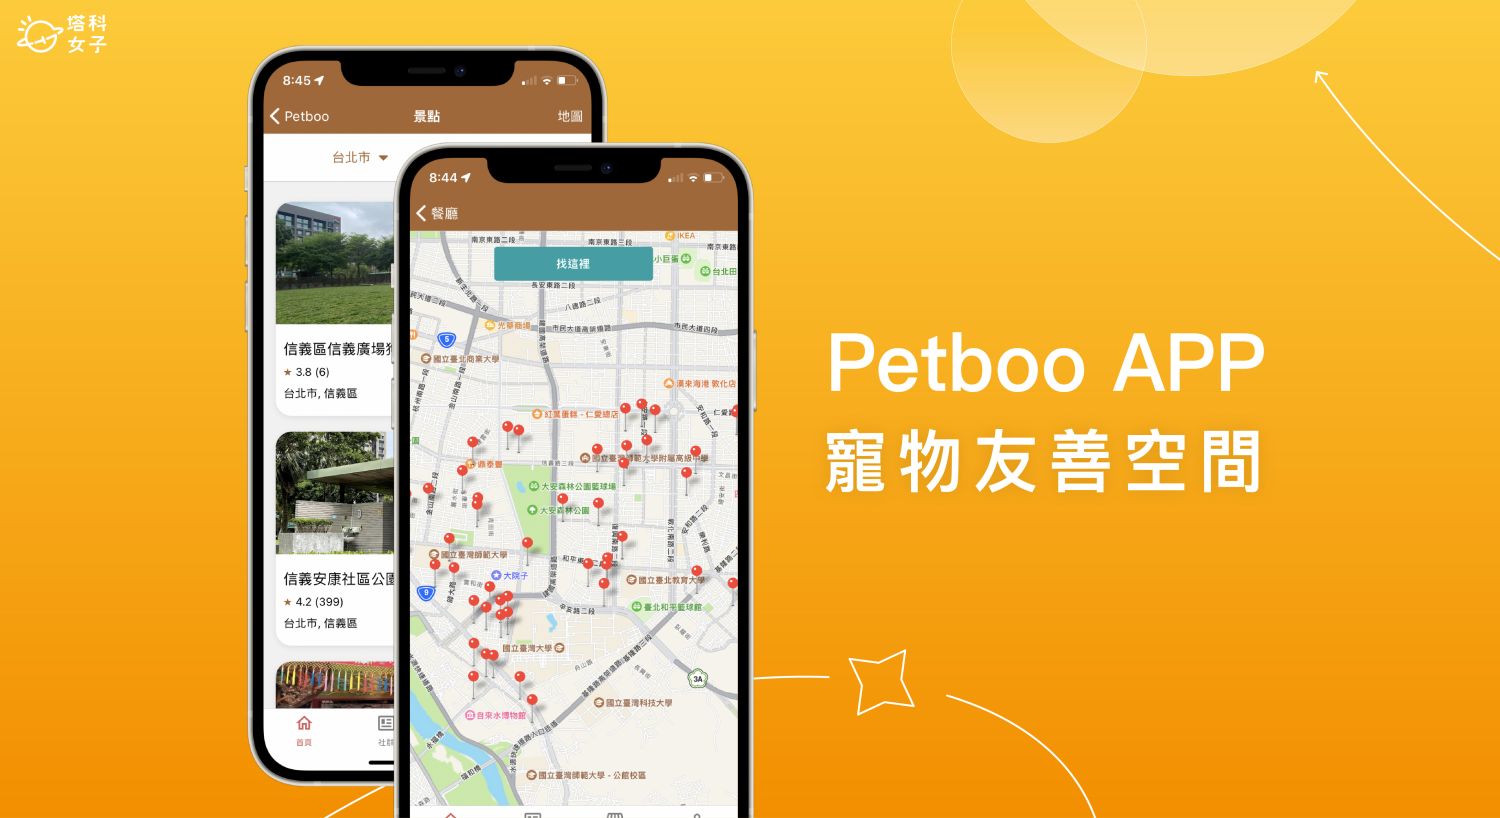 Petboo 寵物友善空間 App 查詢全台貓狗友善餐廳、景點、住宿飯店